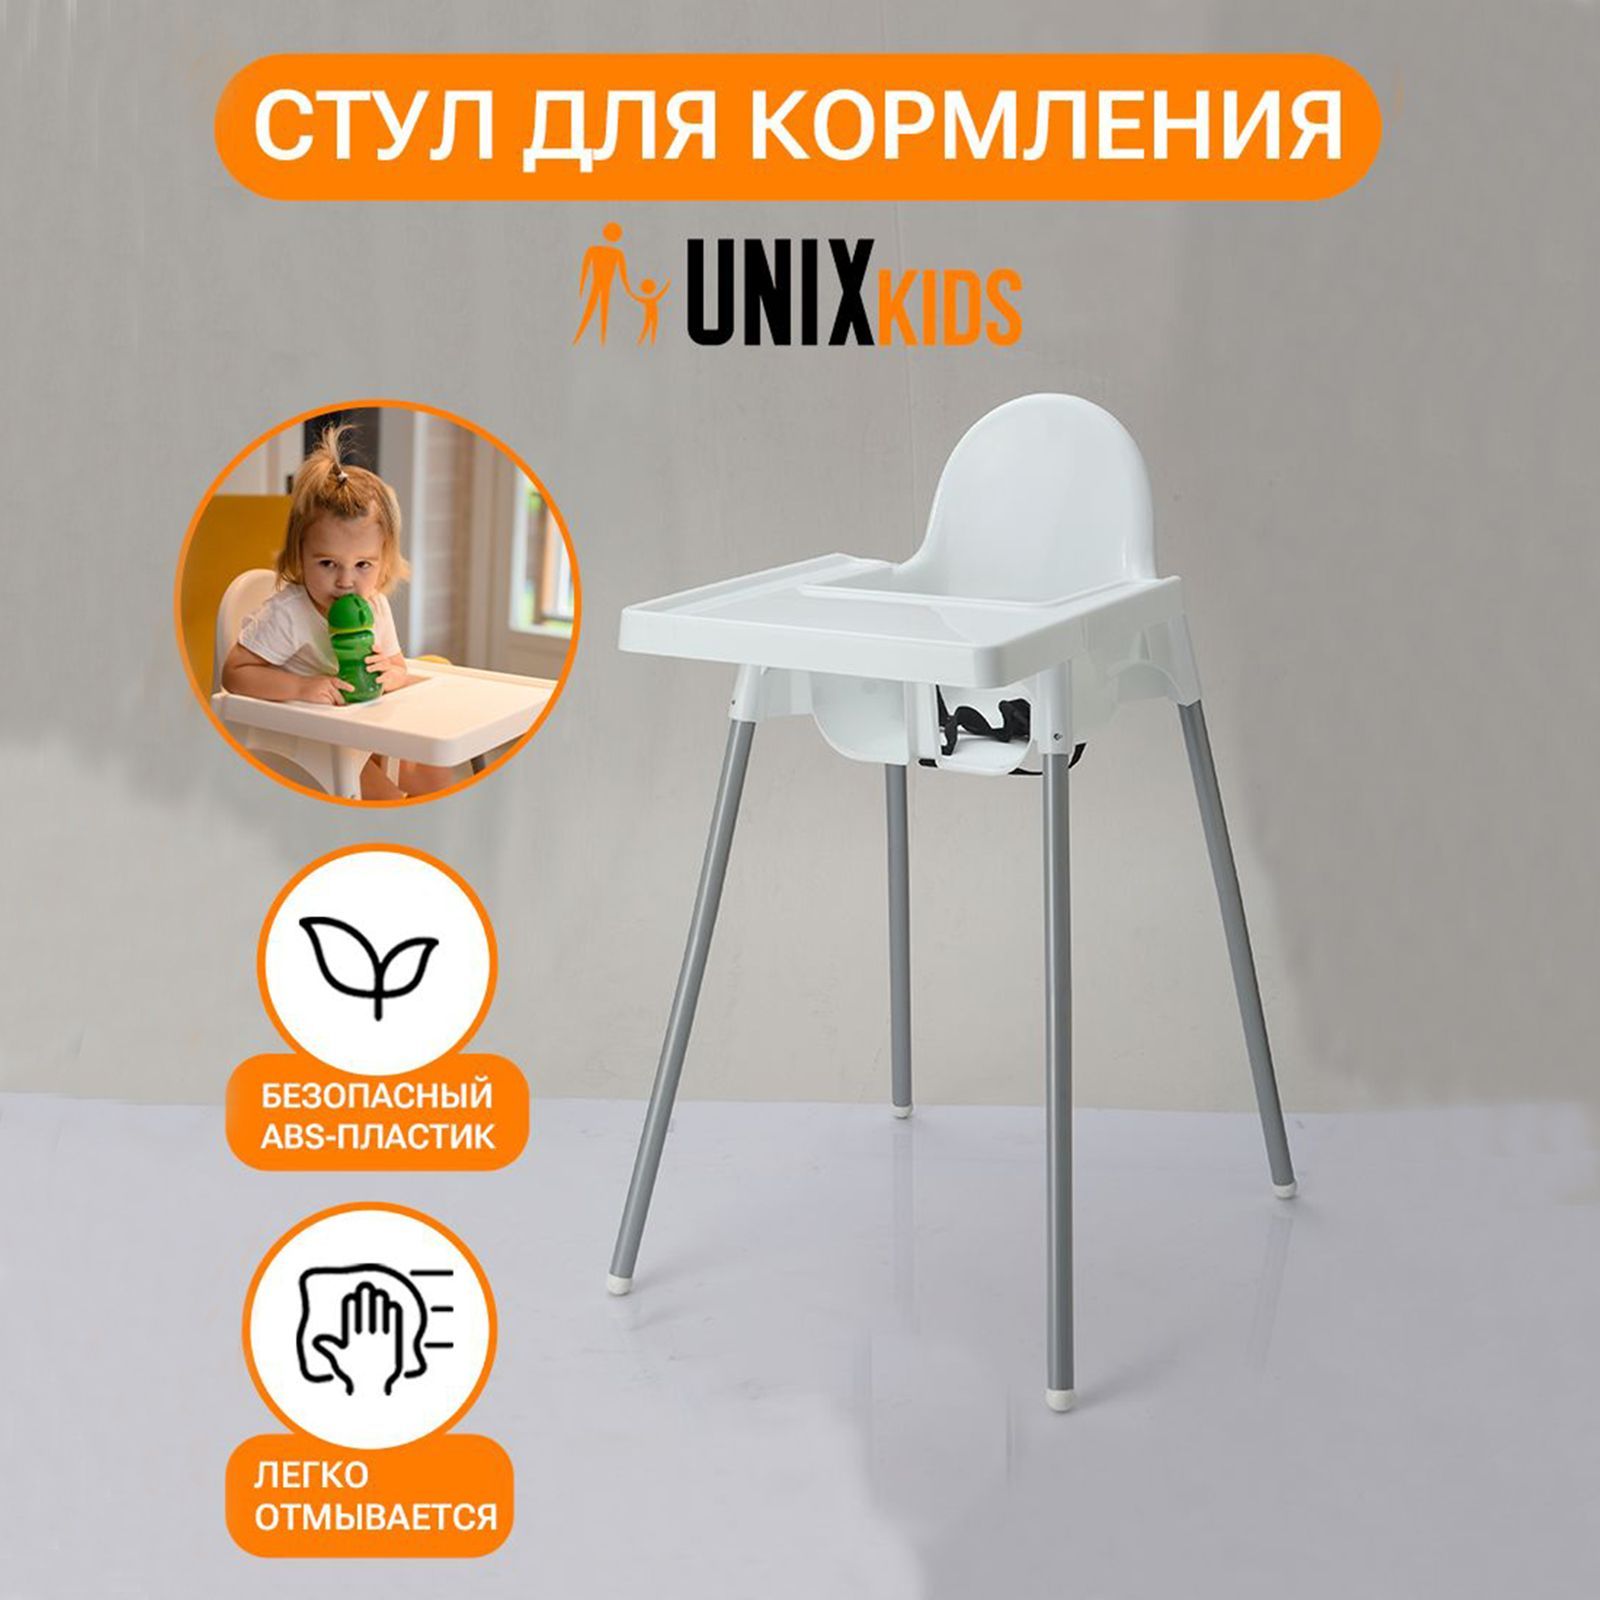 Стульчик для кормления UNIX Kids Fixed White - аналог ИКЕА, со столиком стульчик для кормления unix kids fixed white съемный столик